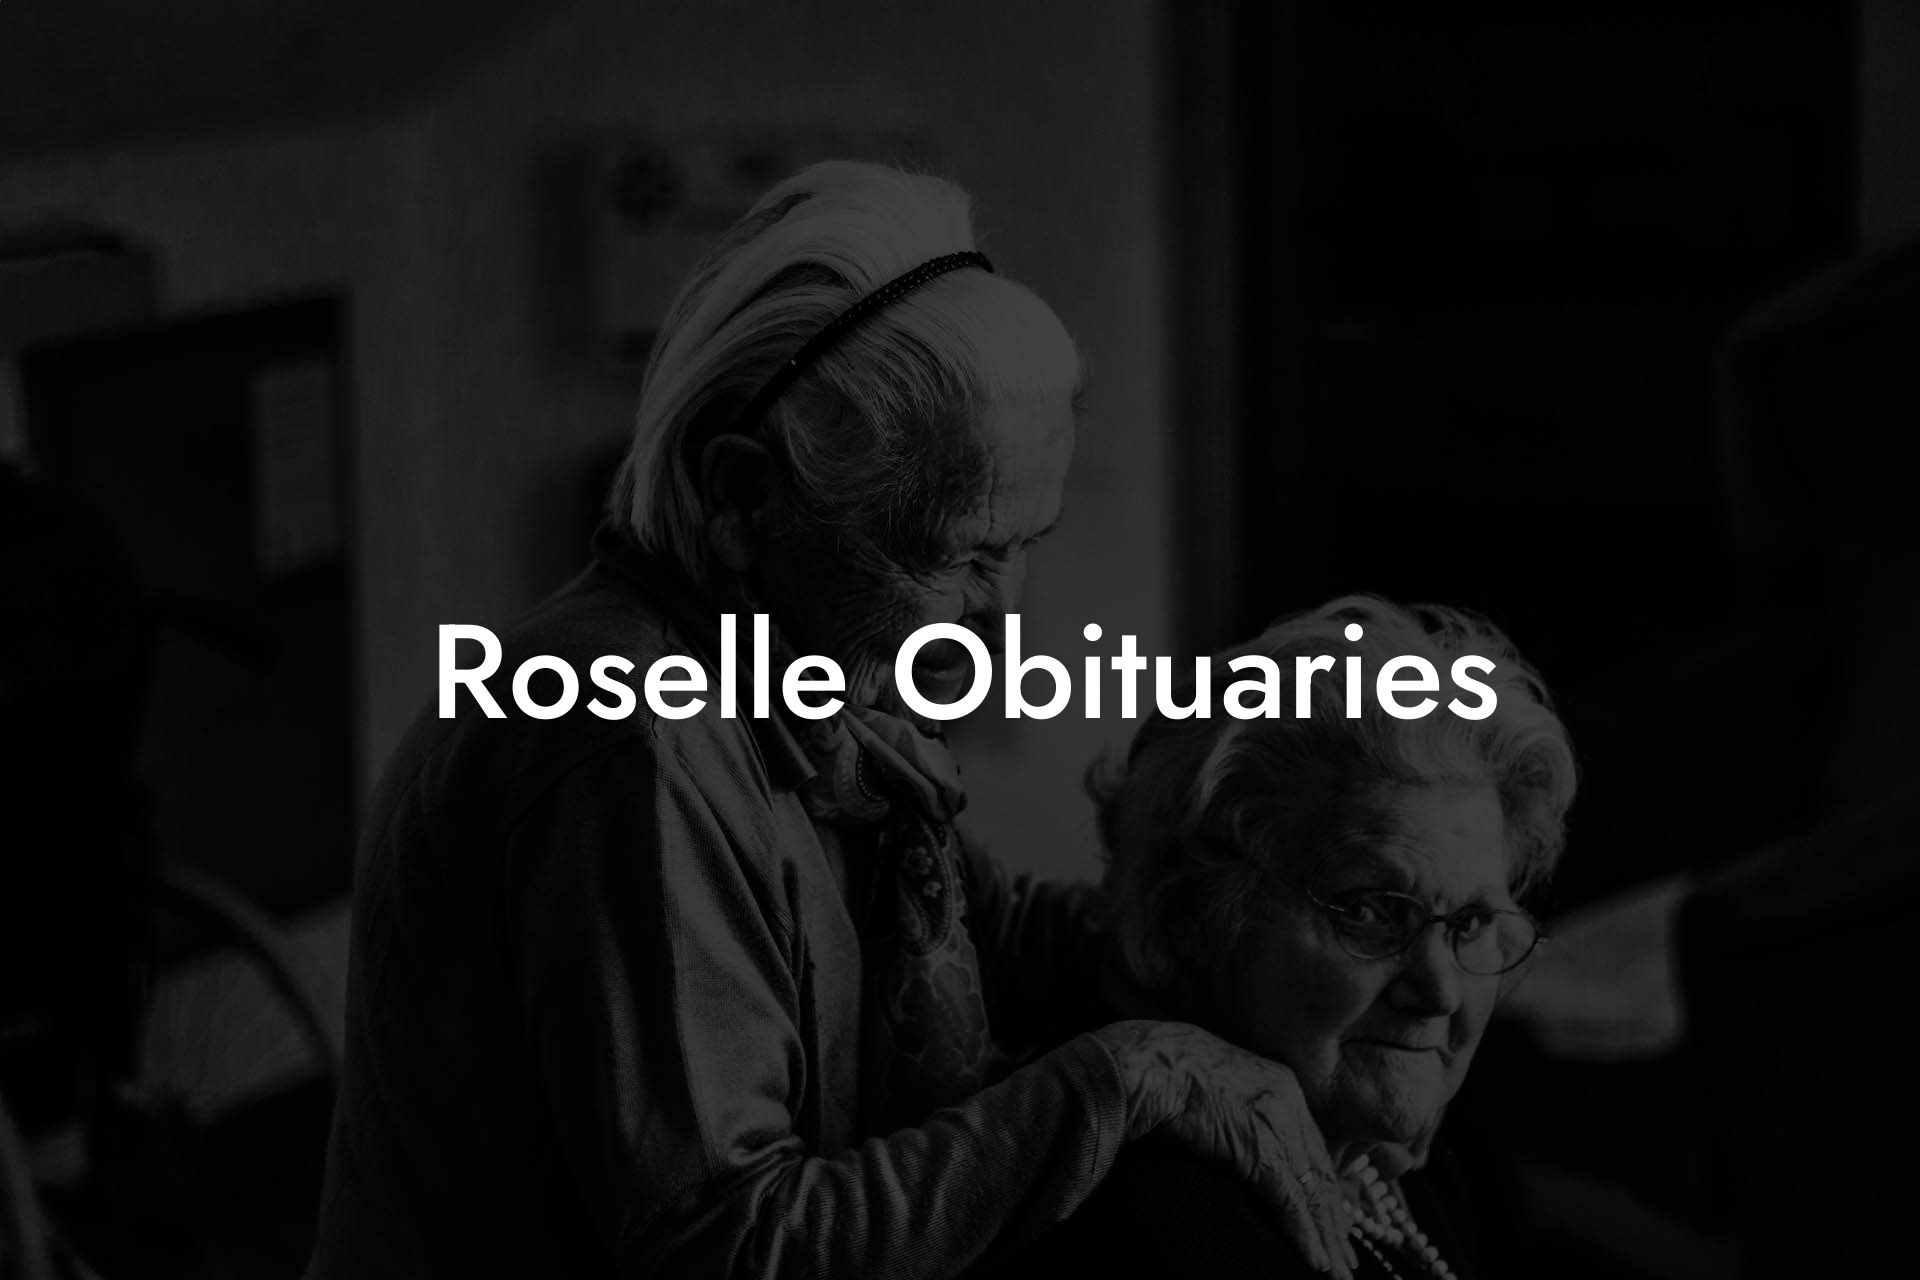 Roselle Obituaries